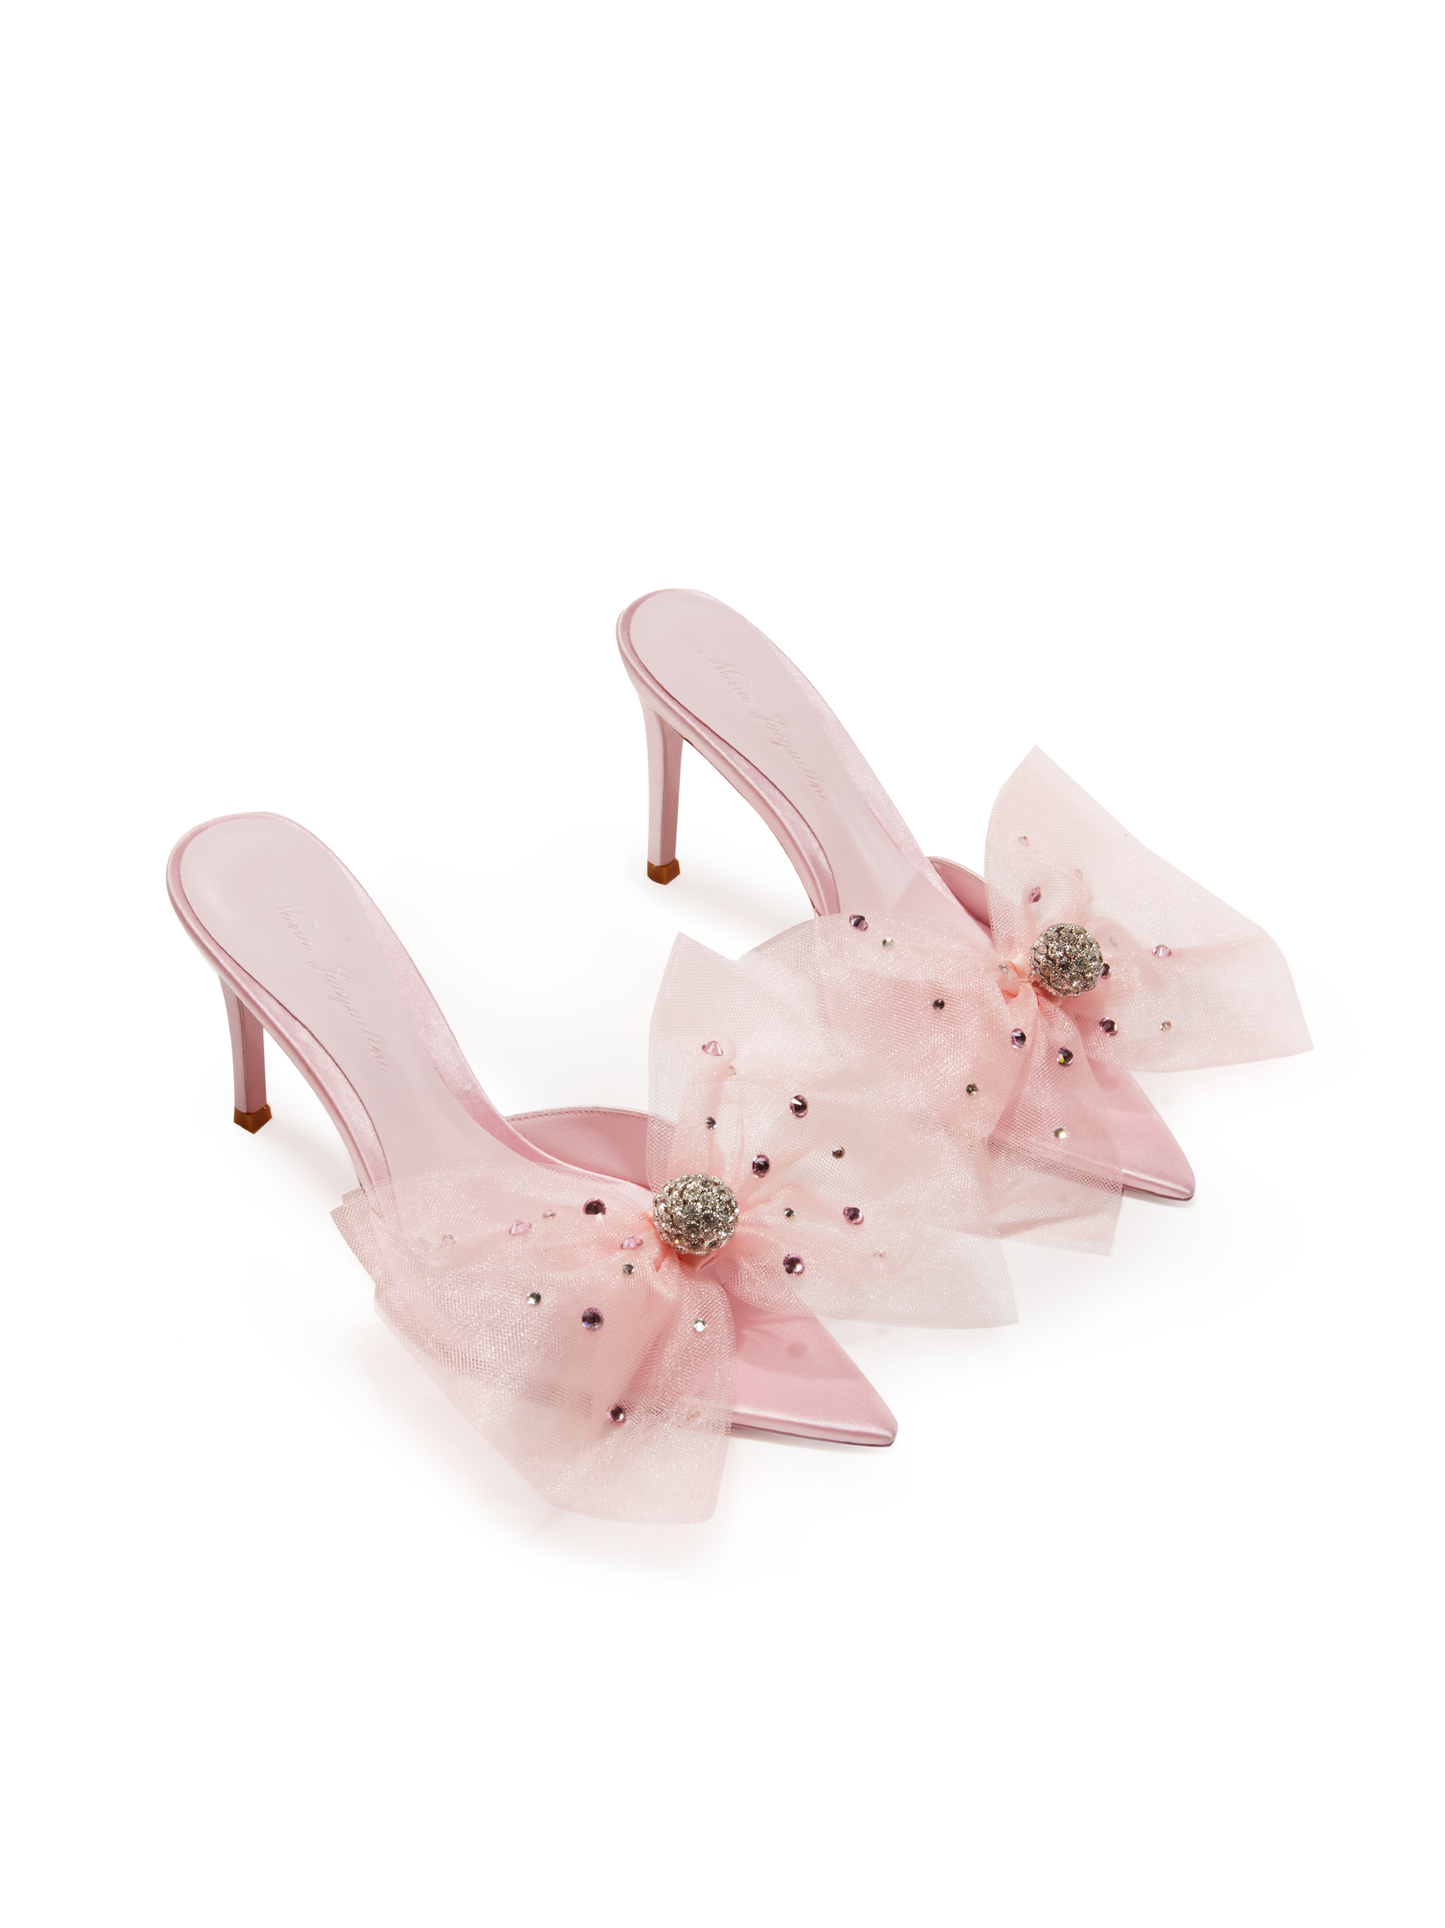 Isabella Bow Heels (Pink) (Final Sale)